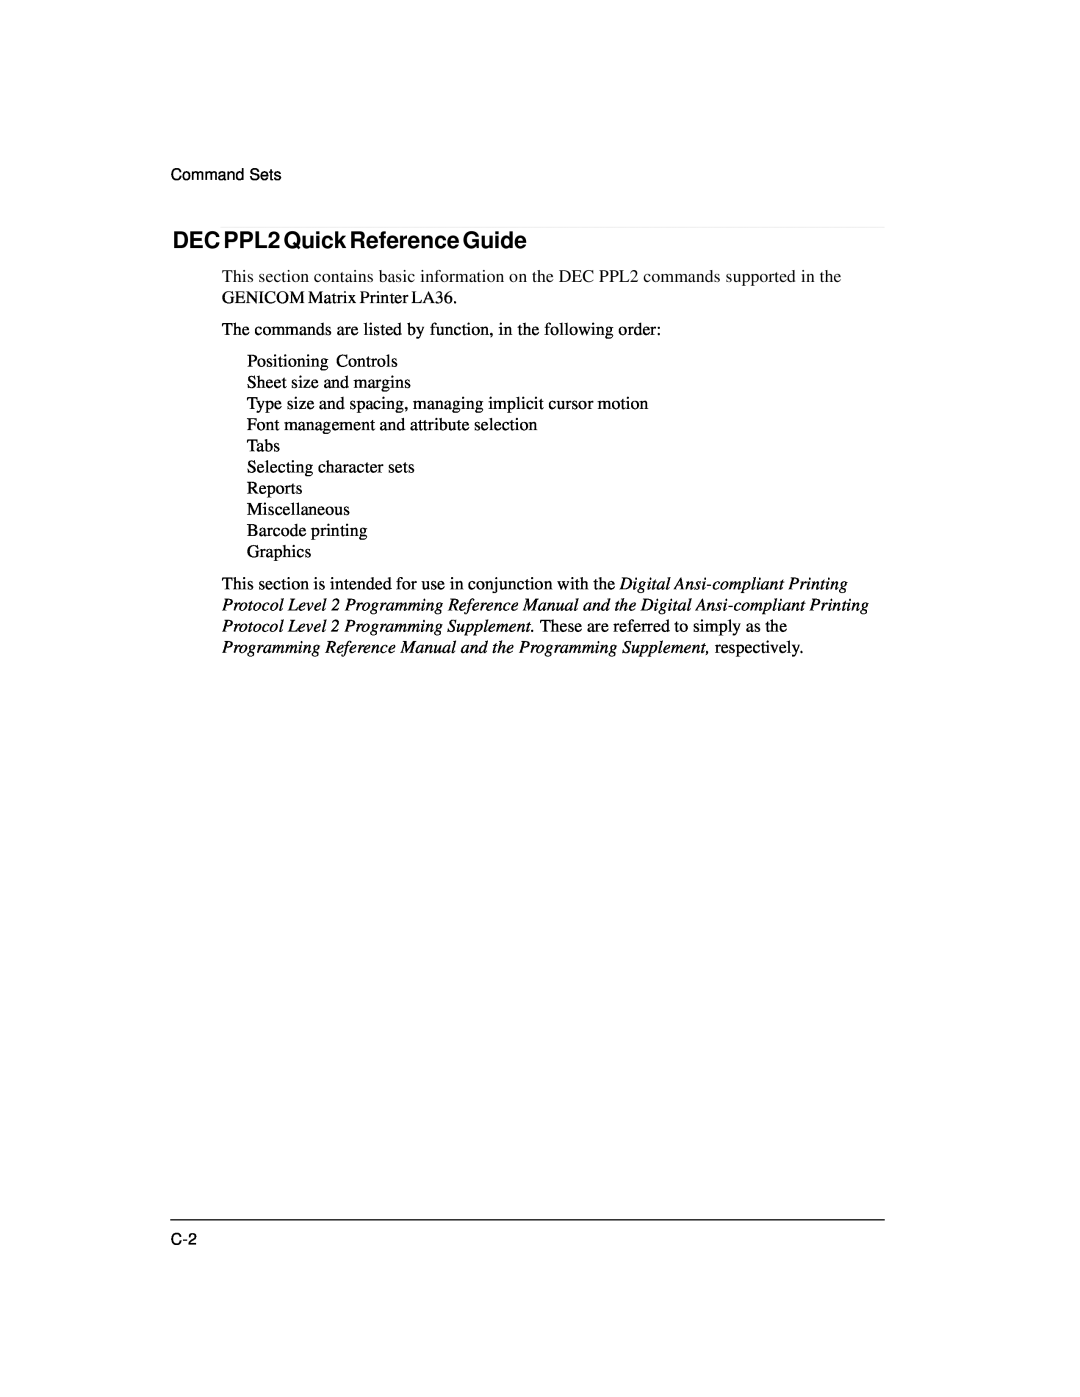 Genicom LA36 manual DEC PPL2 Quick Reference Guide 